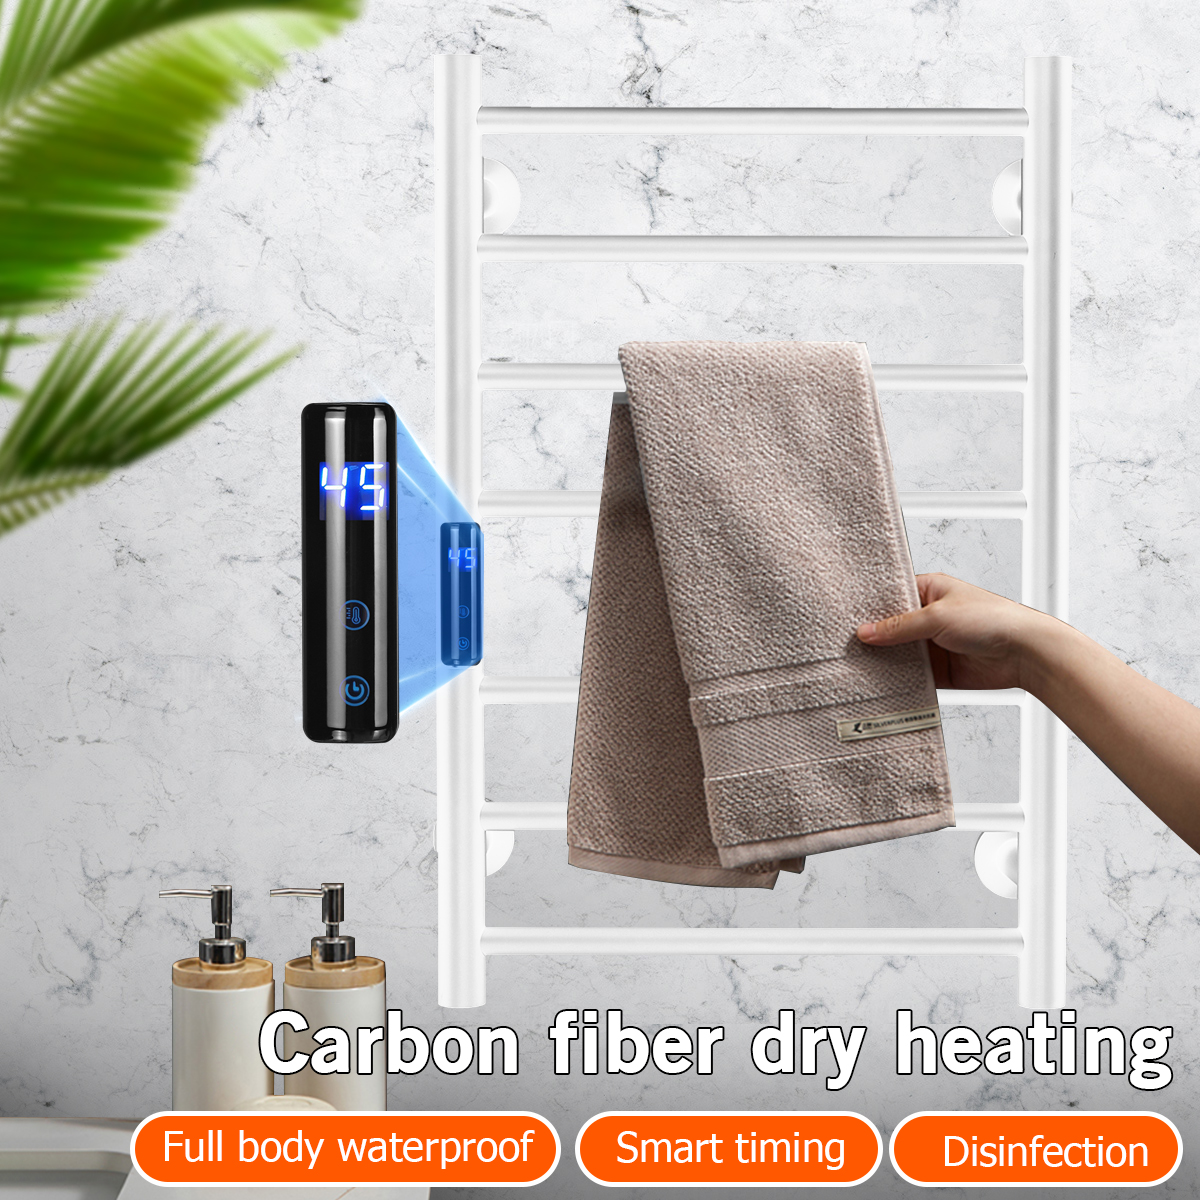 Stainless-Steel-Carbon-Brazing-Heating-Towel-Rack-Waterproof-Clothes-Drying-Rack-Electric-Towel-Rack-1910606-2